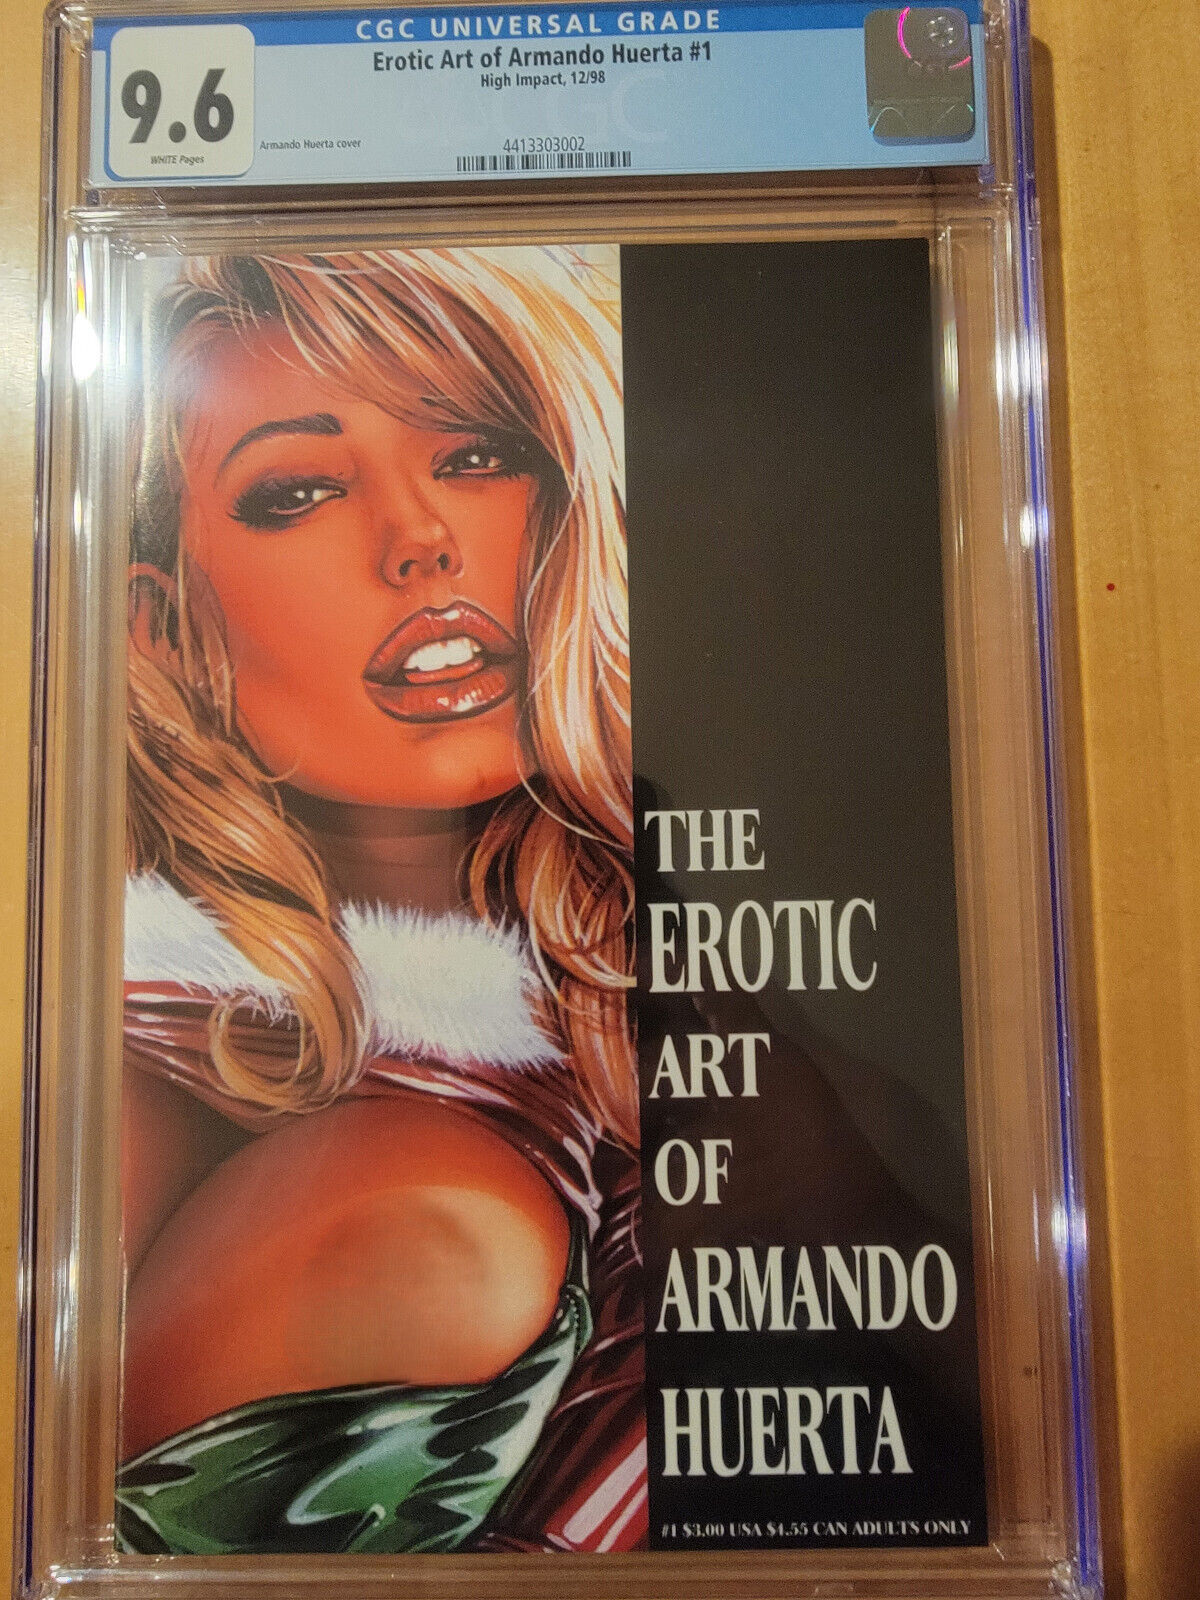 RARE ABC Studios Presents “The Erotic Art of Armando Huerta Volume #1”